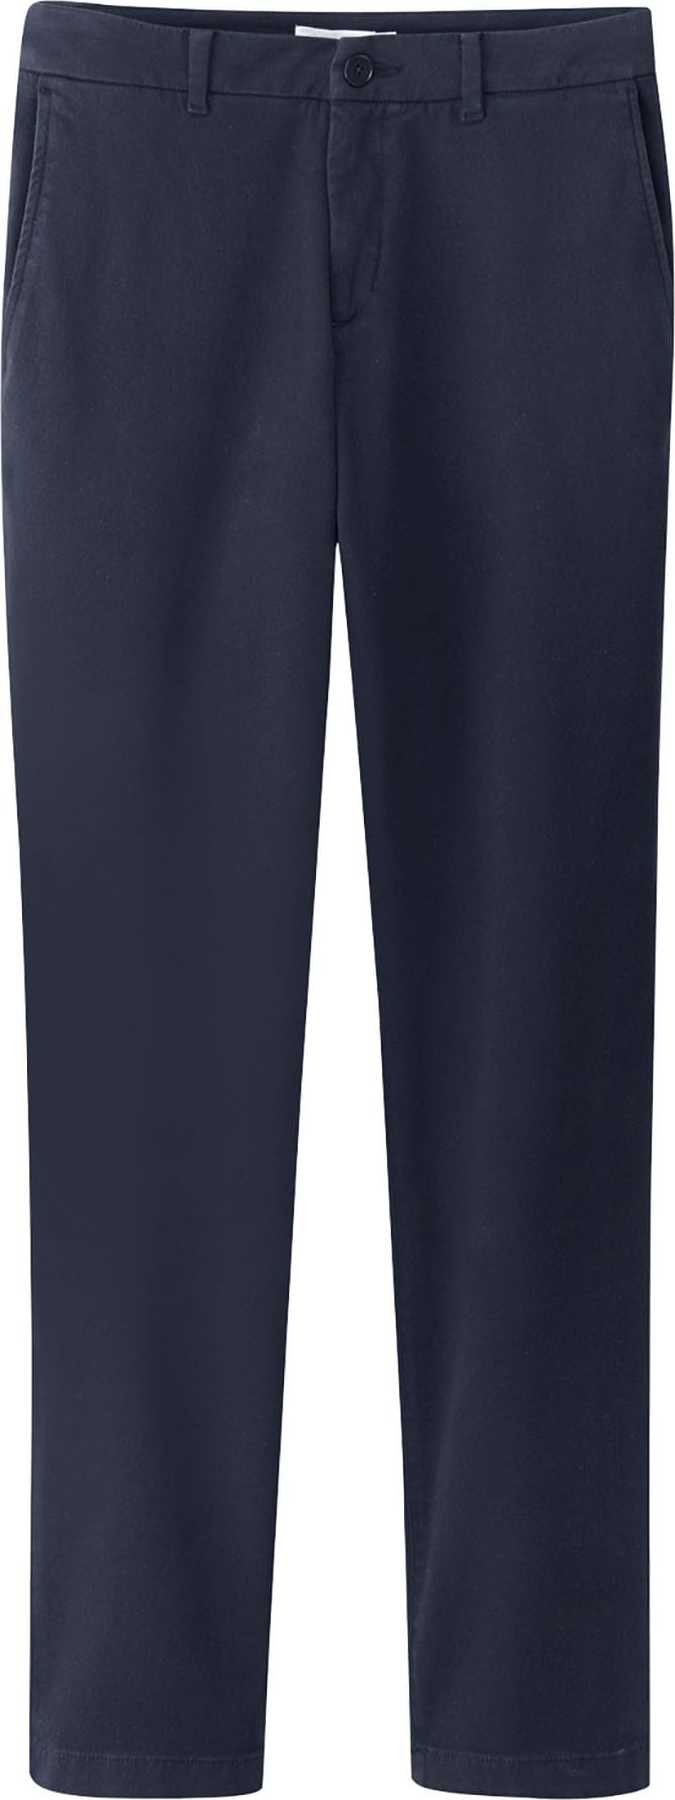 hessnatur Chino kalhoty marine modrá